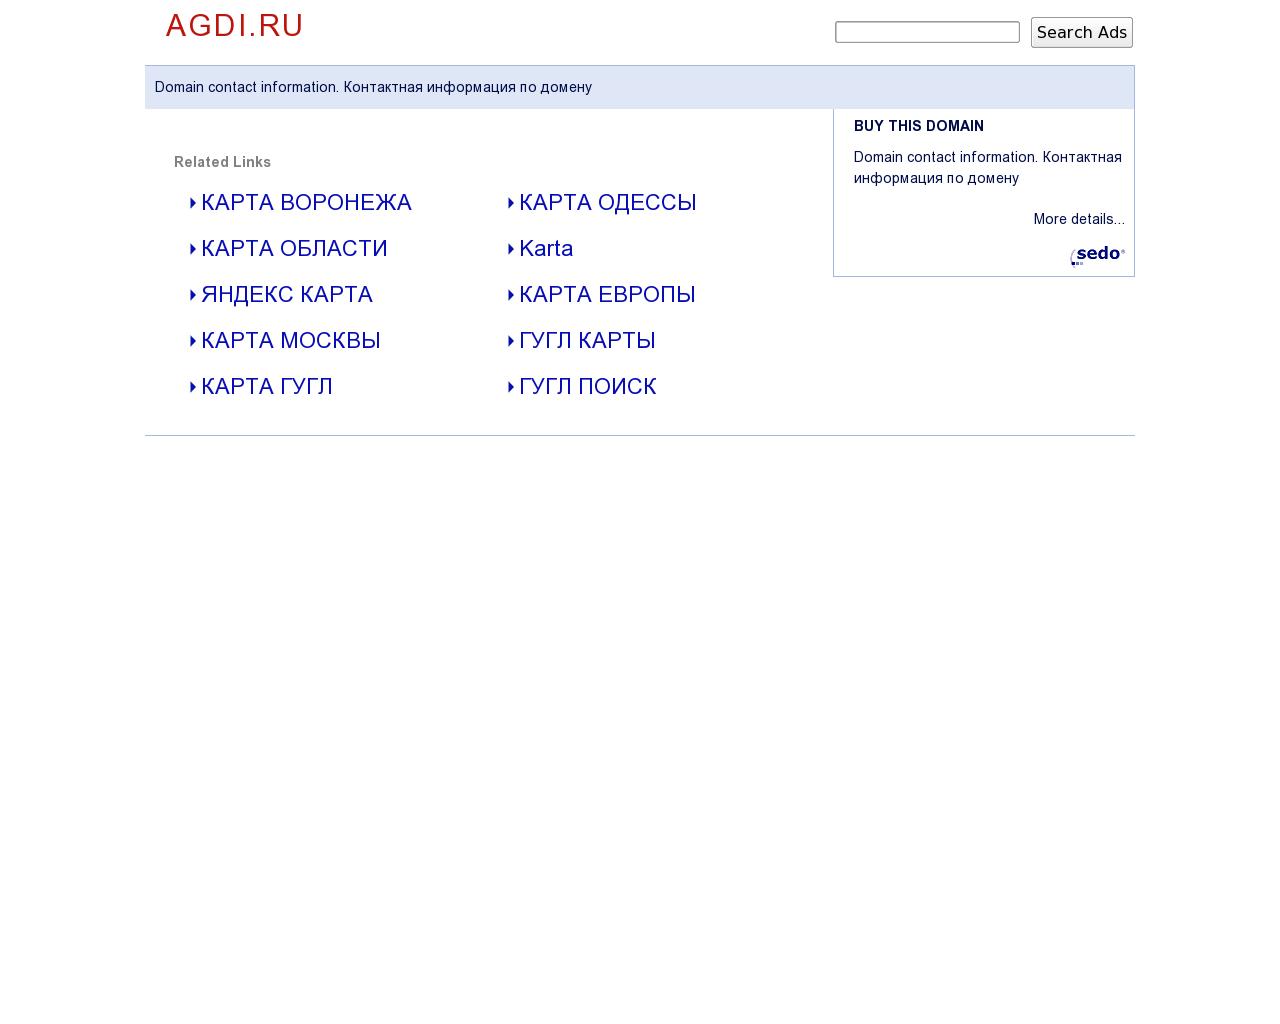 Изображение сайта agdi.ru в разрешении 1280x1024